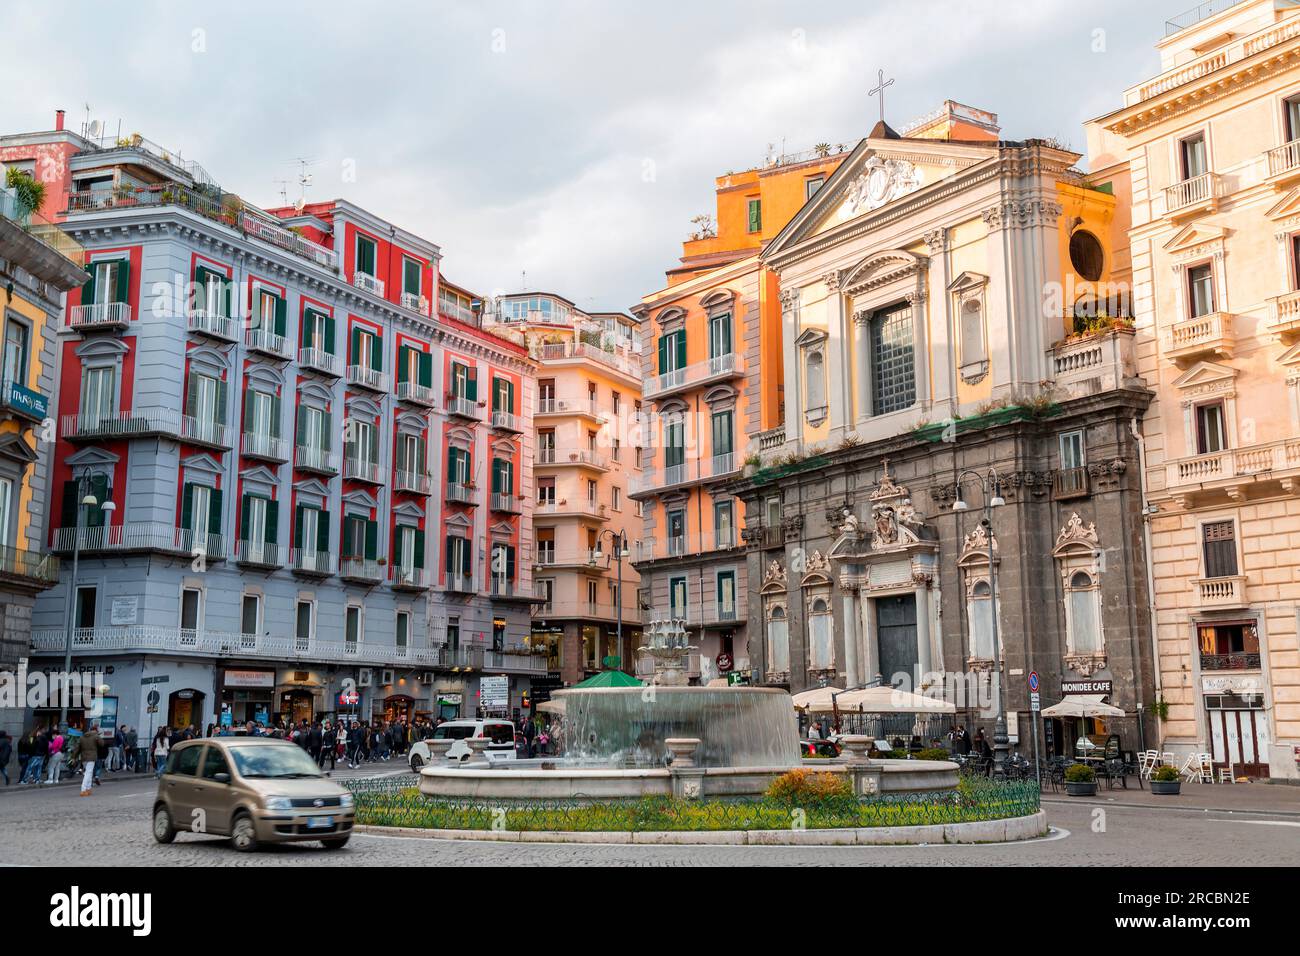 Naples, Italy - April 10, 2022: Piazza Trieste e Trento, one of the main square of the city of Naples, located next to the Plebiscite Square, Campania Stock Photo